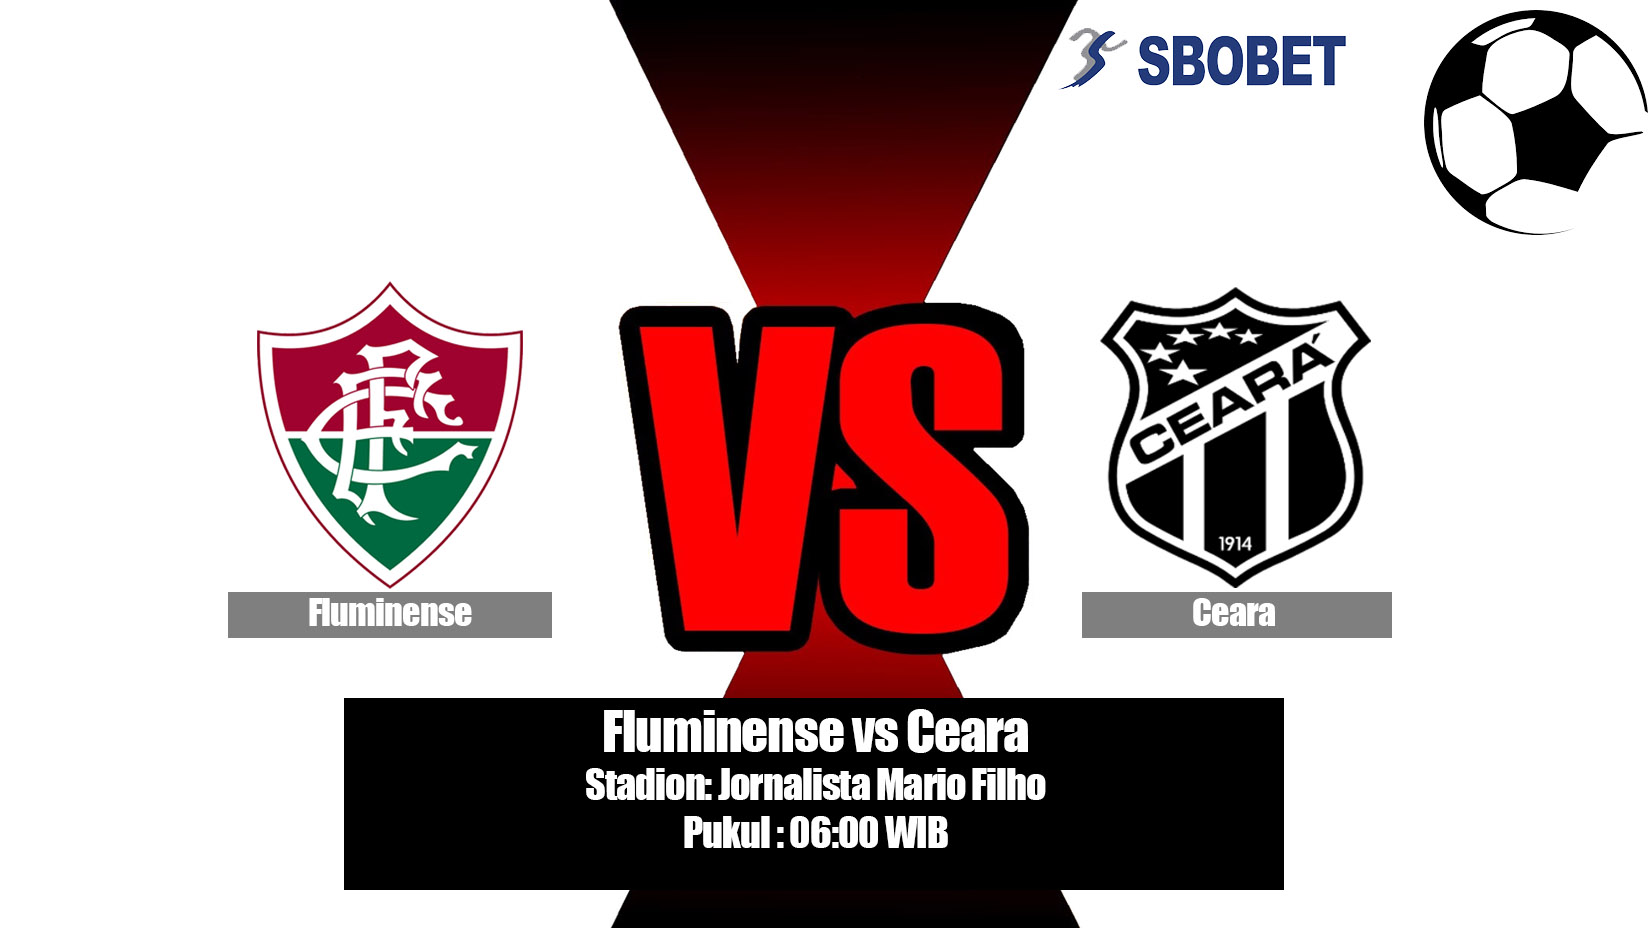 Prediksi Bola Fluminense vs Ceara 16 Juli 2019.jpg